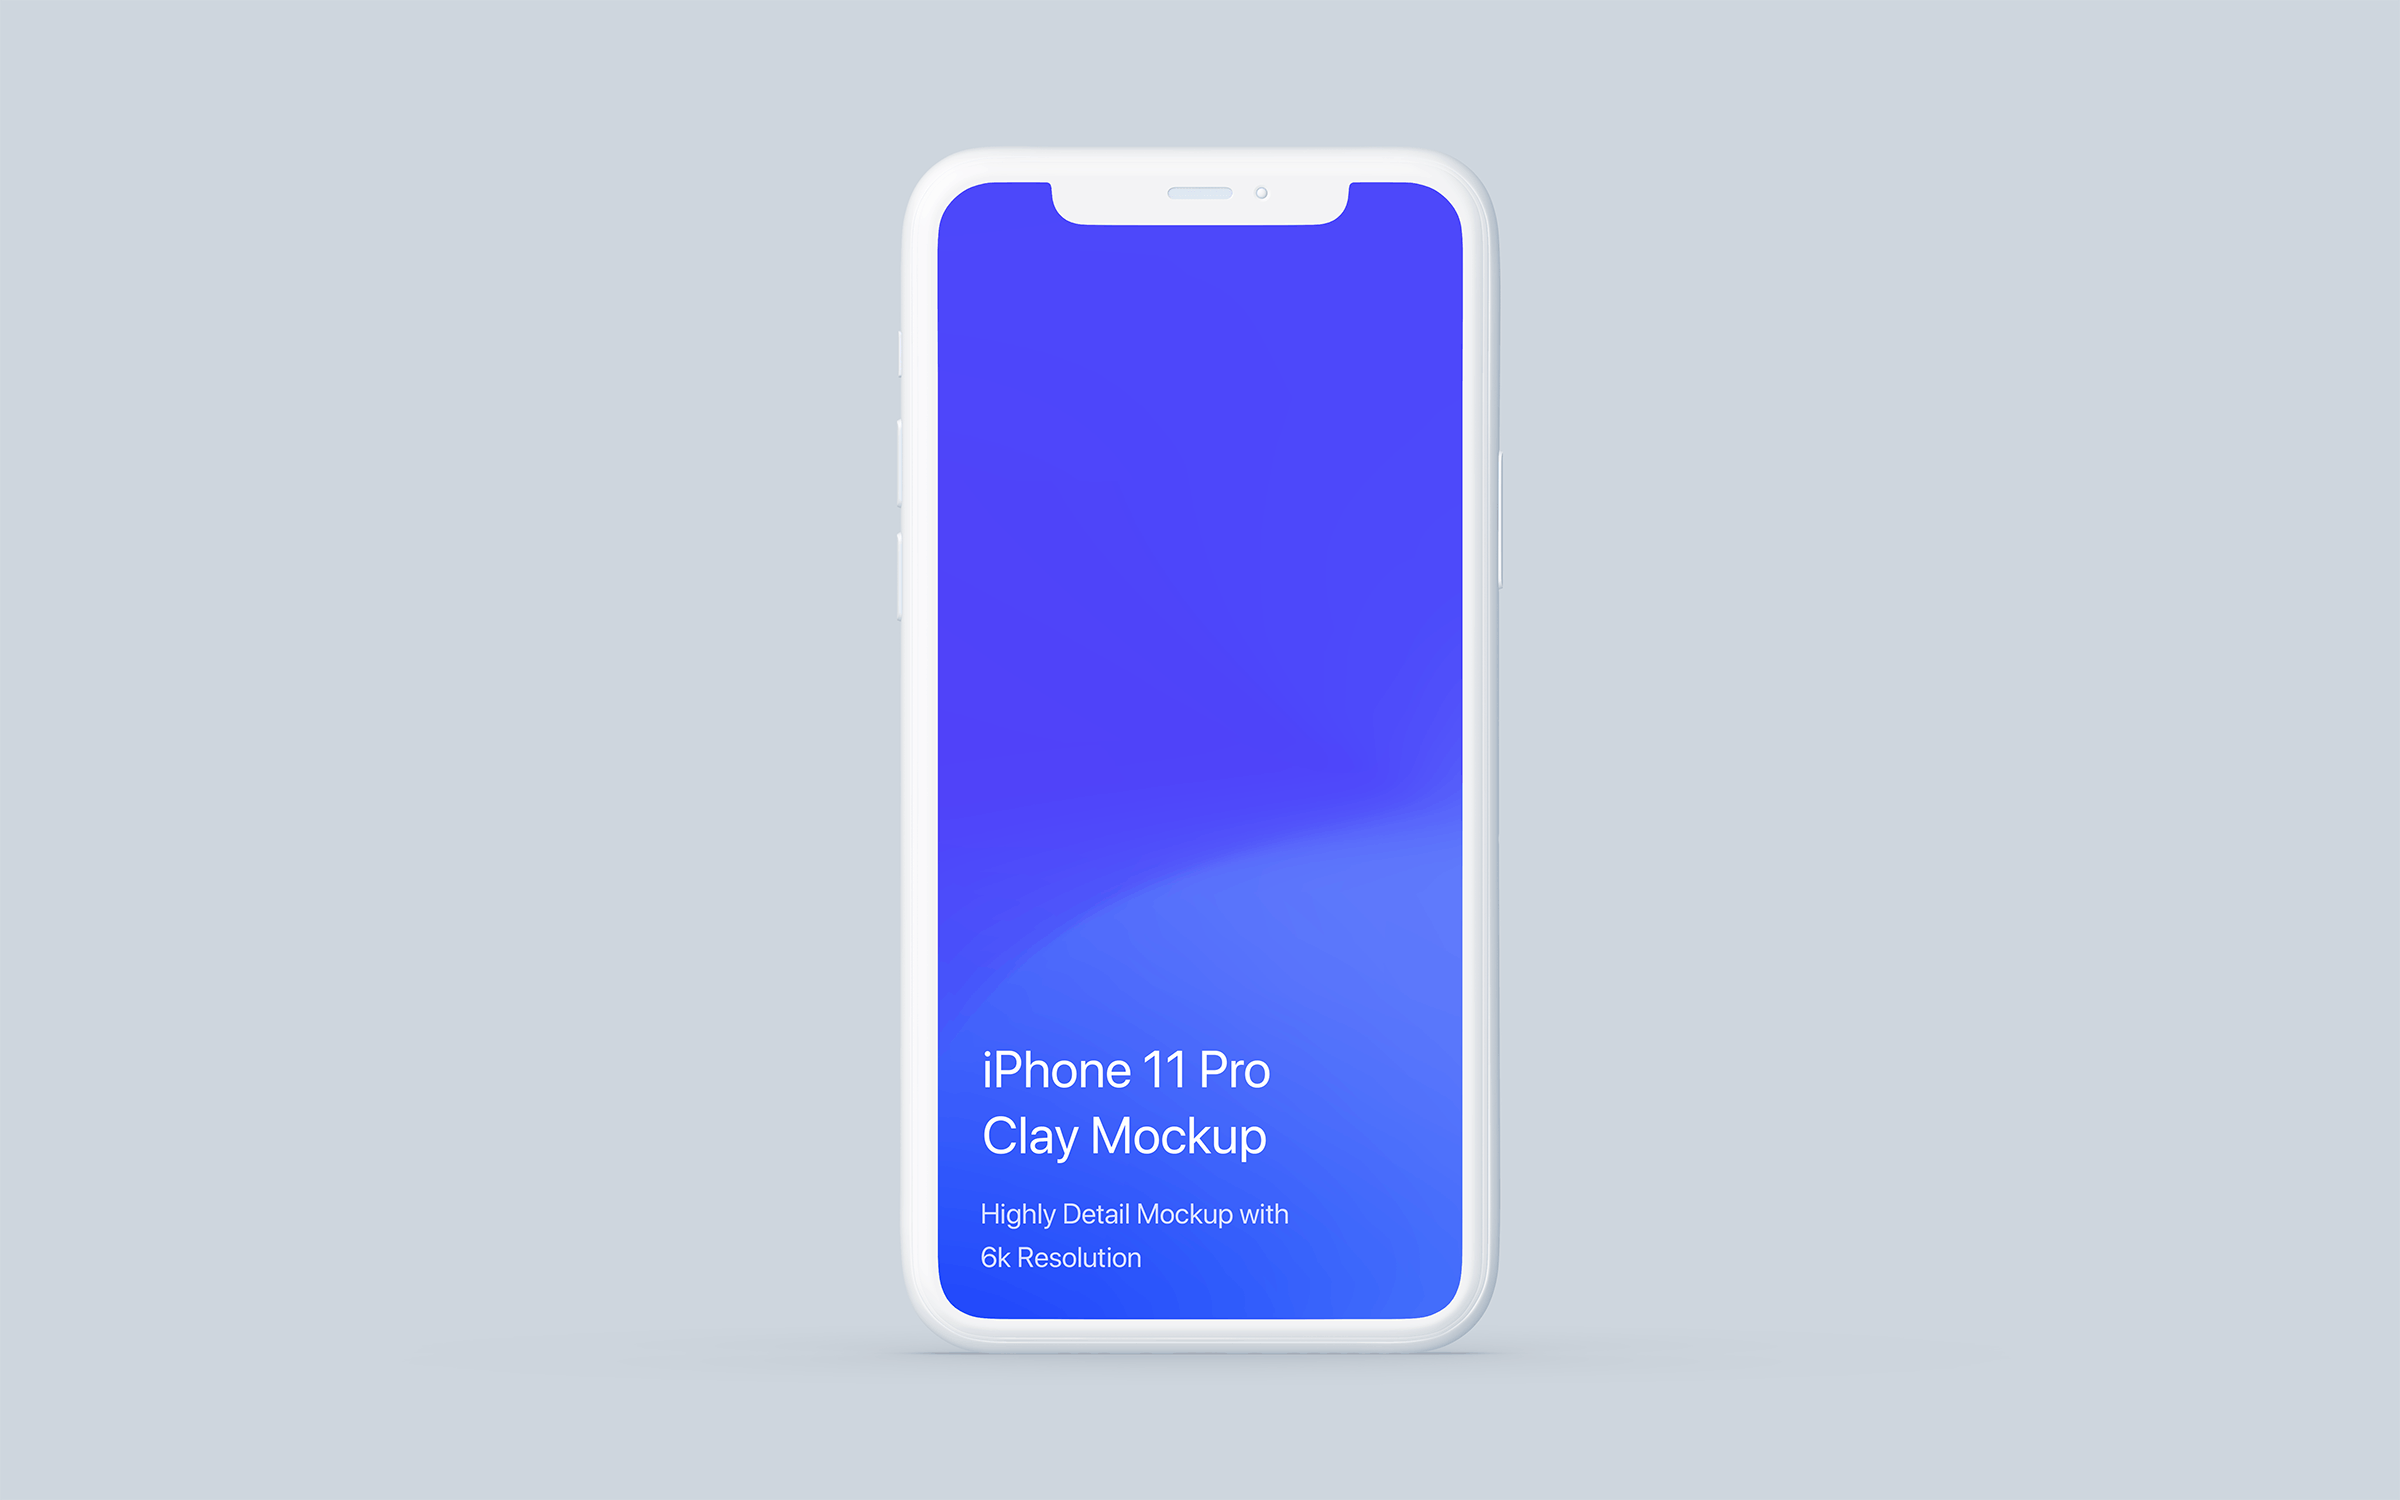 黏土陶瓷风格iPhone 11 Pro手机第一素材精选样机模板 iPhone 11 Pro Mockup – Clay Mockup Pack插图(4)